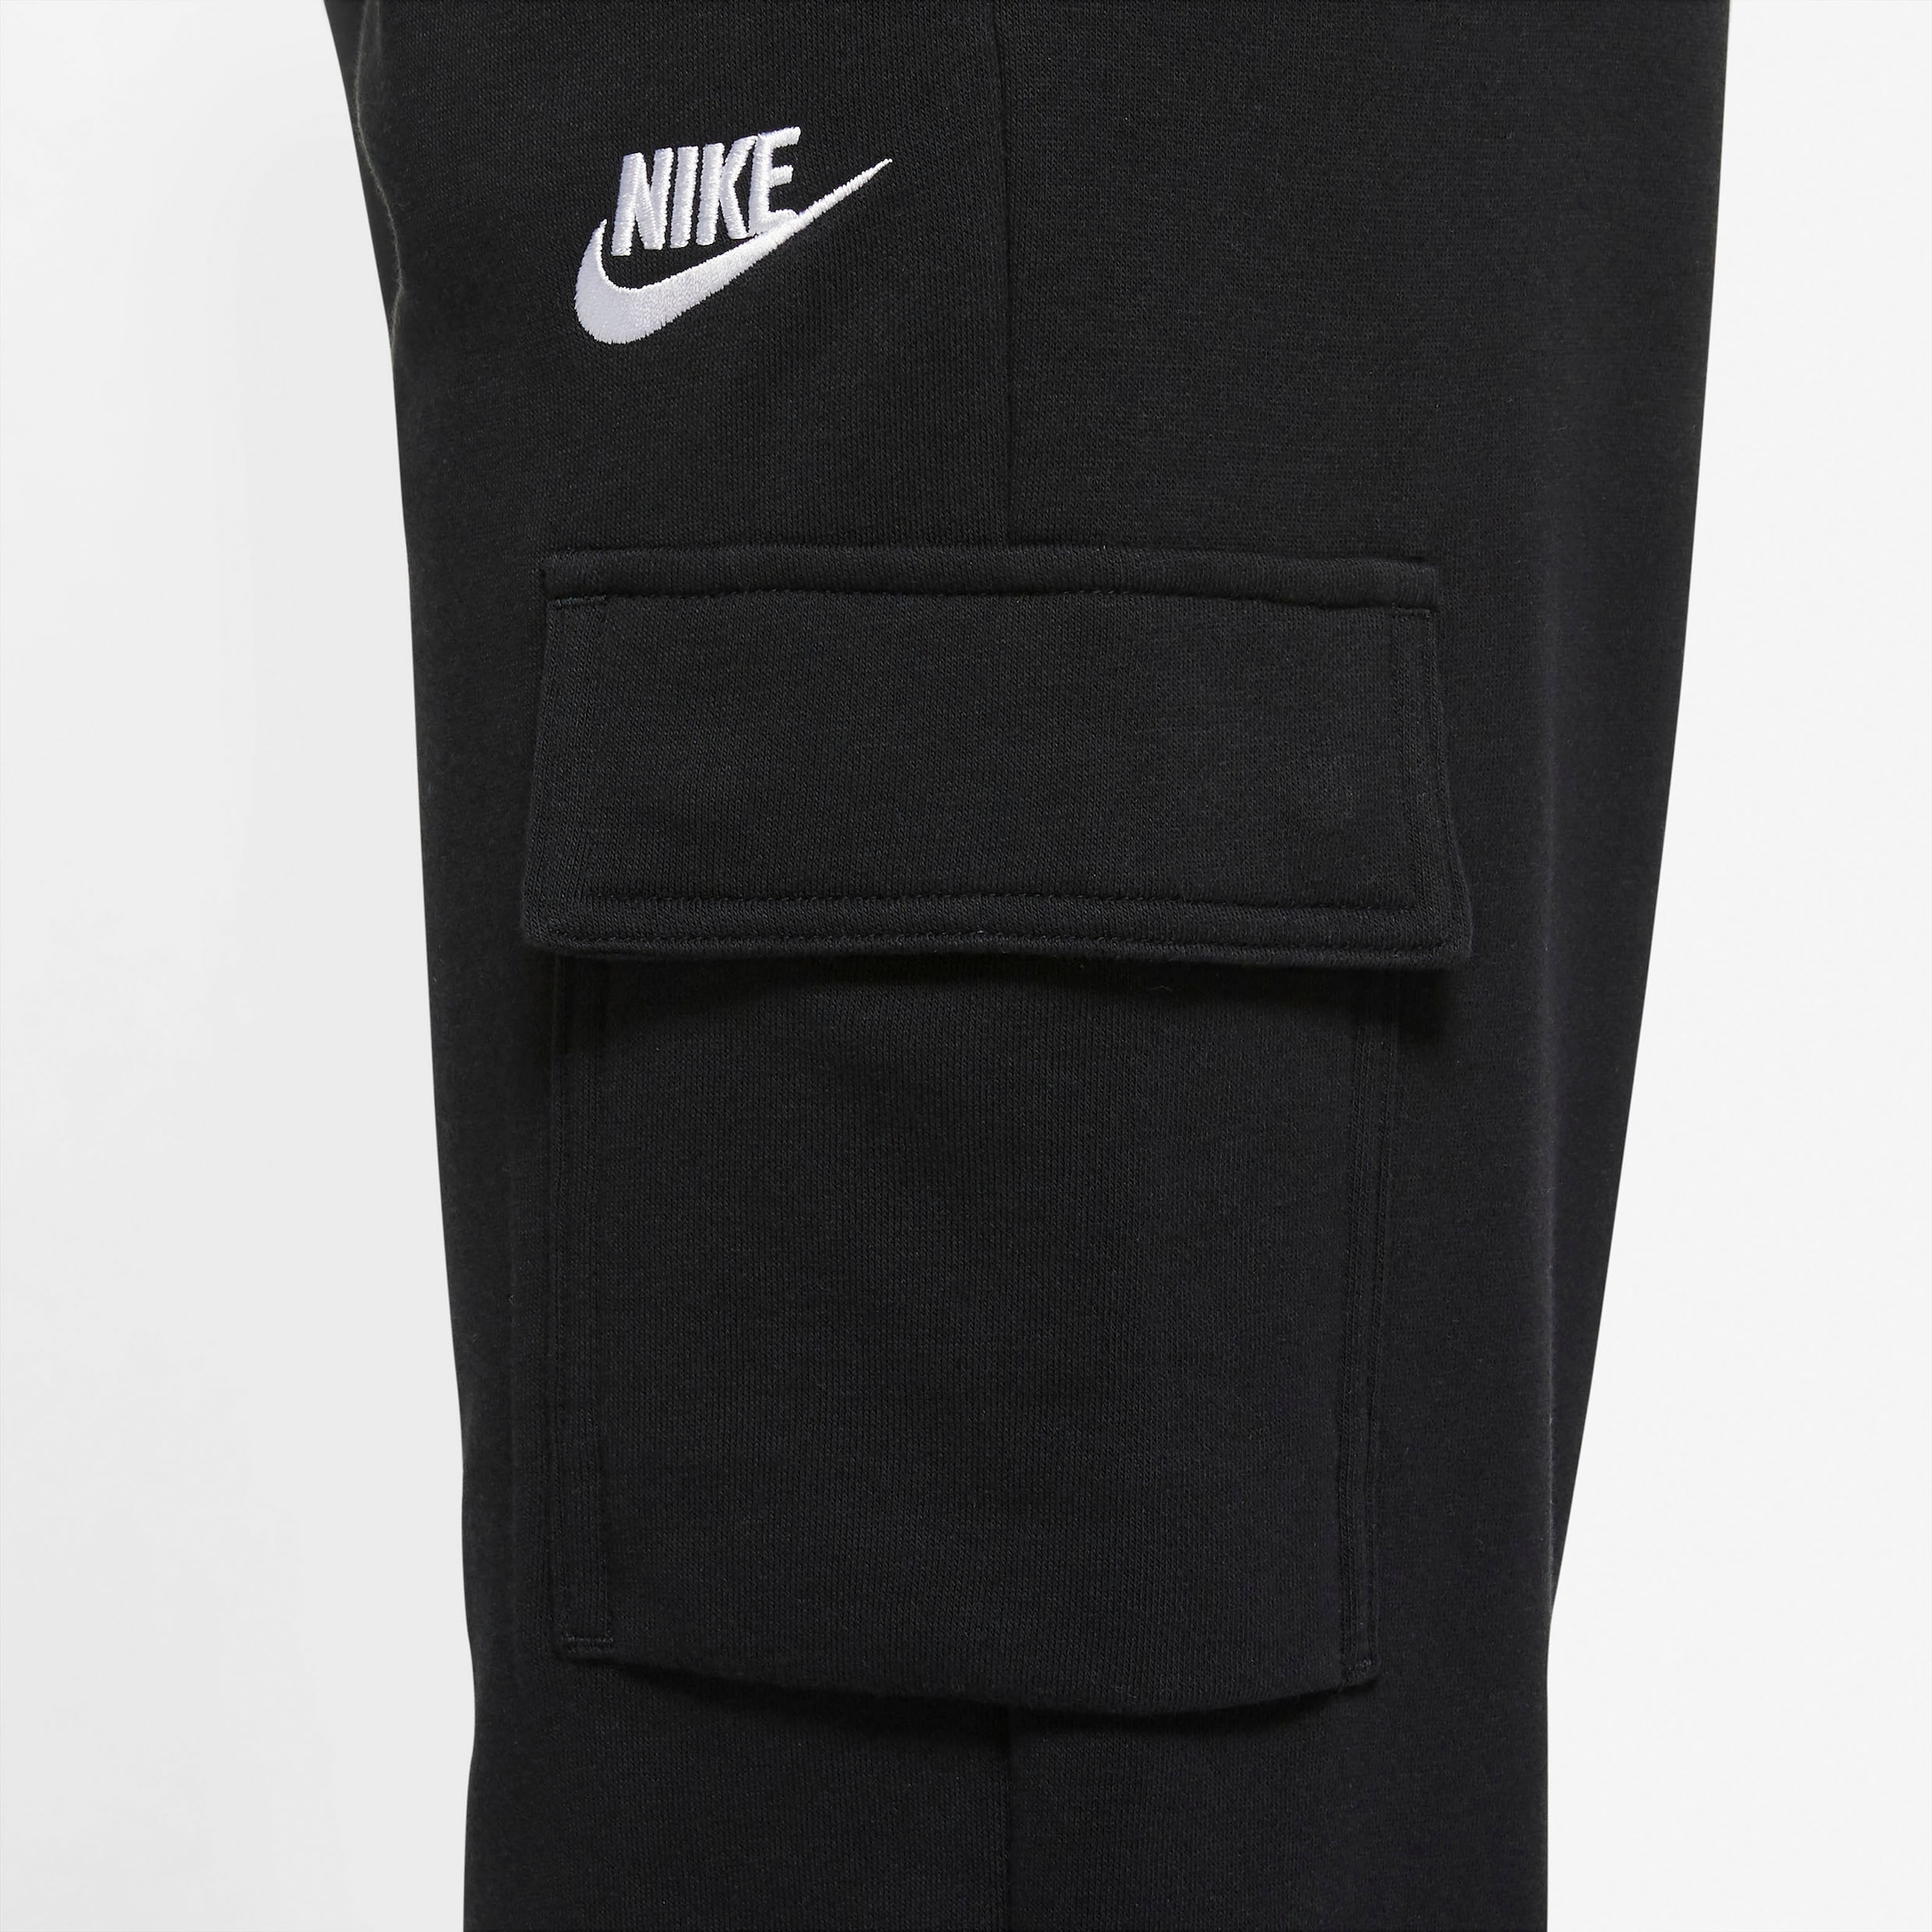 »ESSENTIALS WOMENS Nike PANTS« kaufen OTTO Jogginghose Sportswear bei